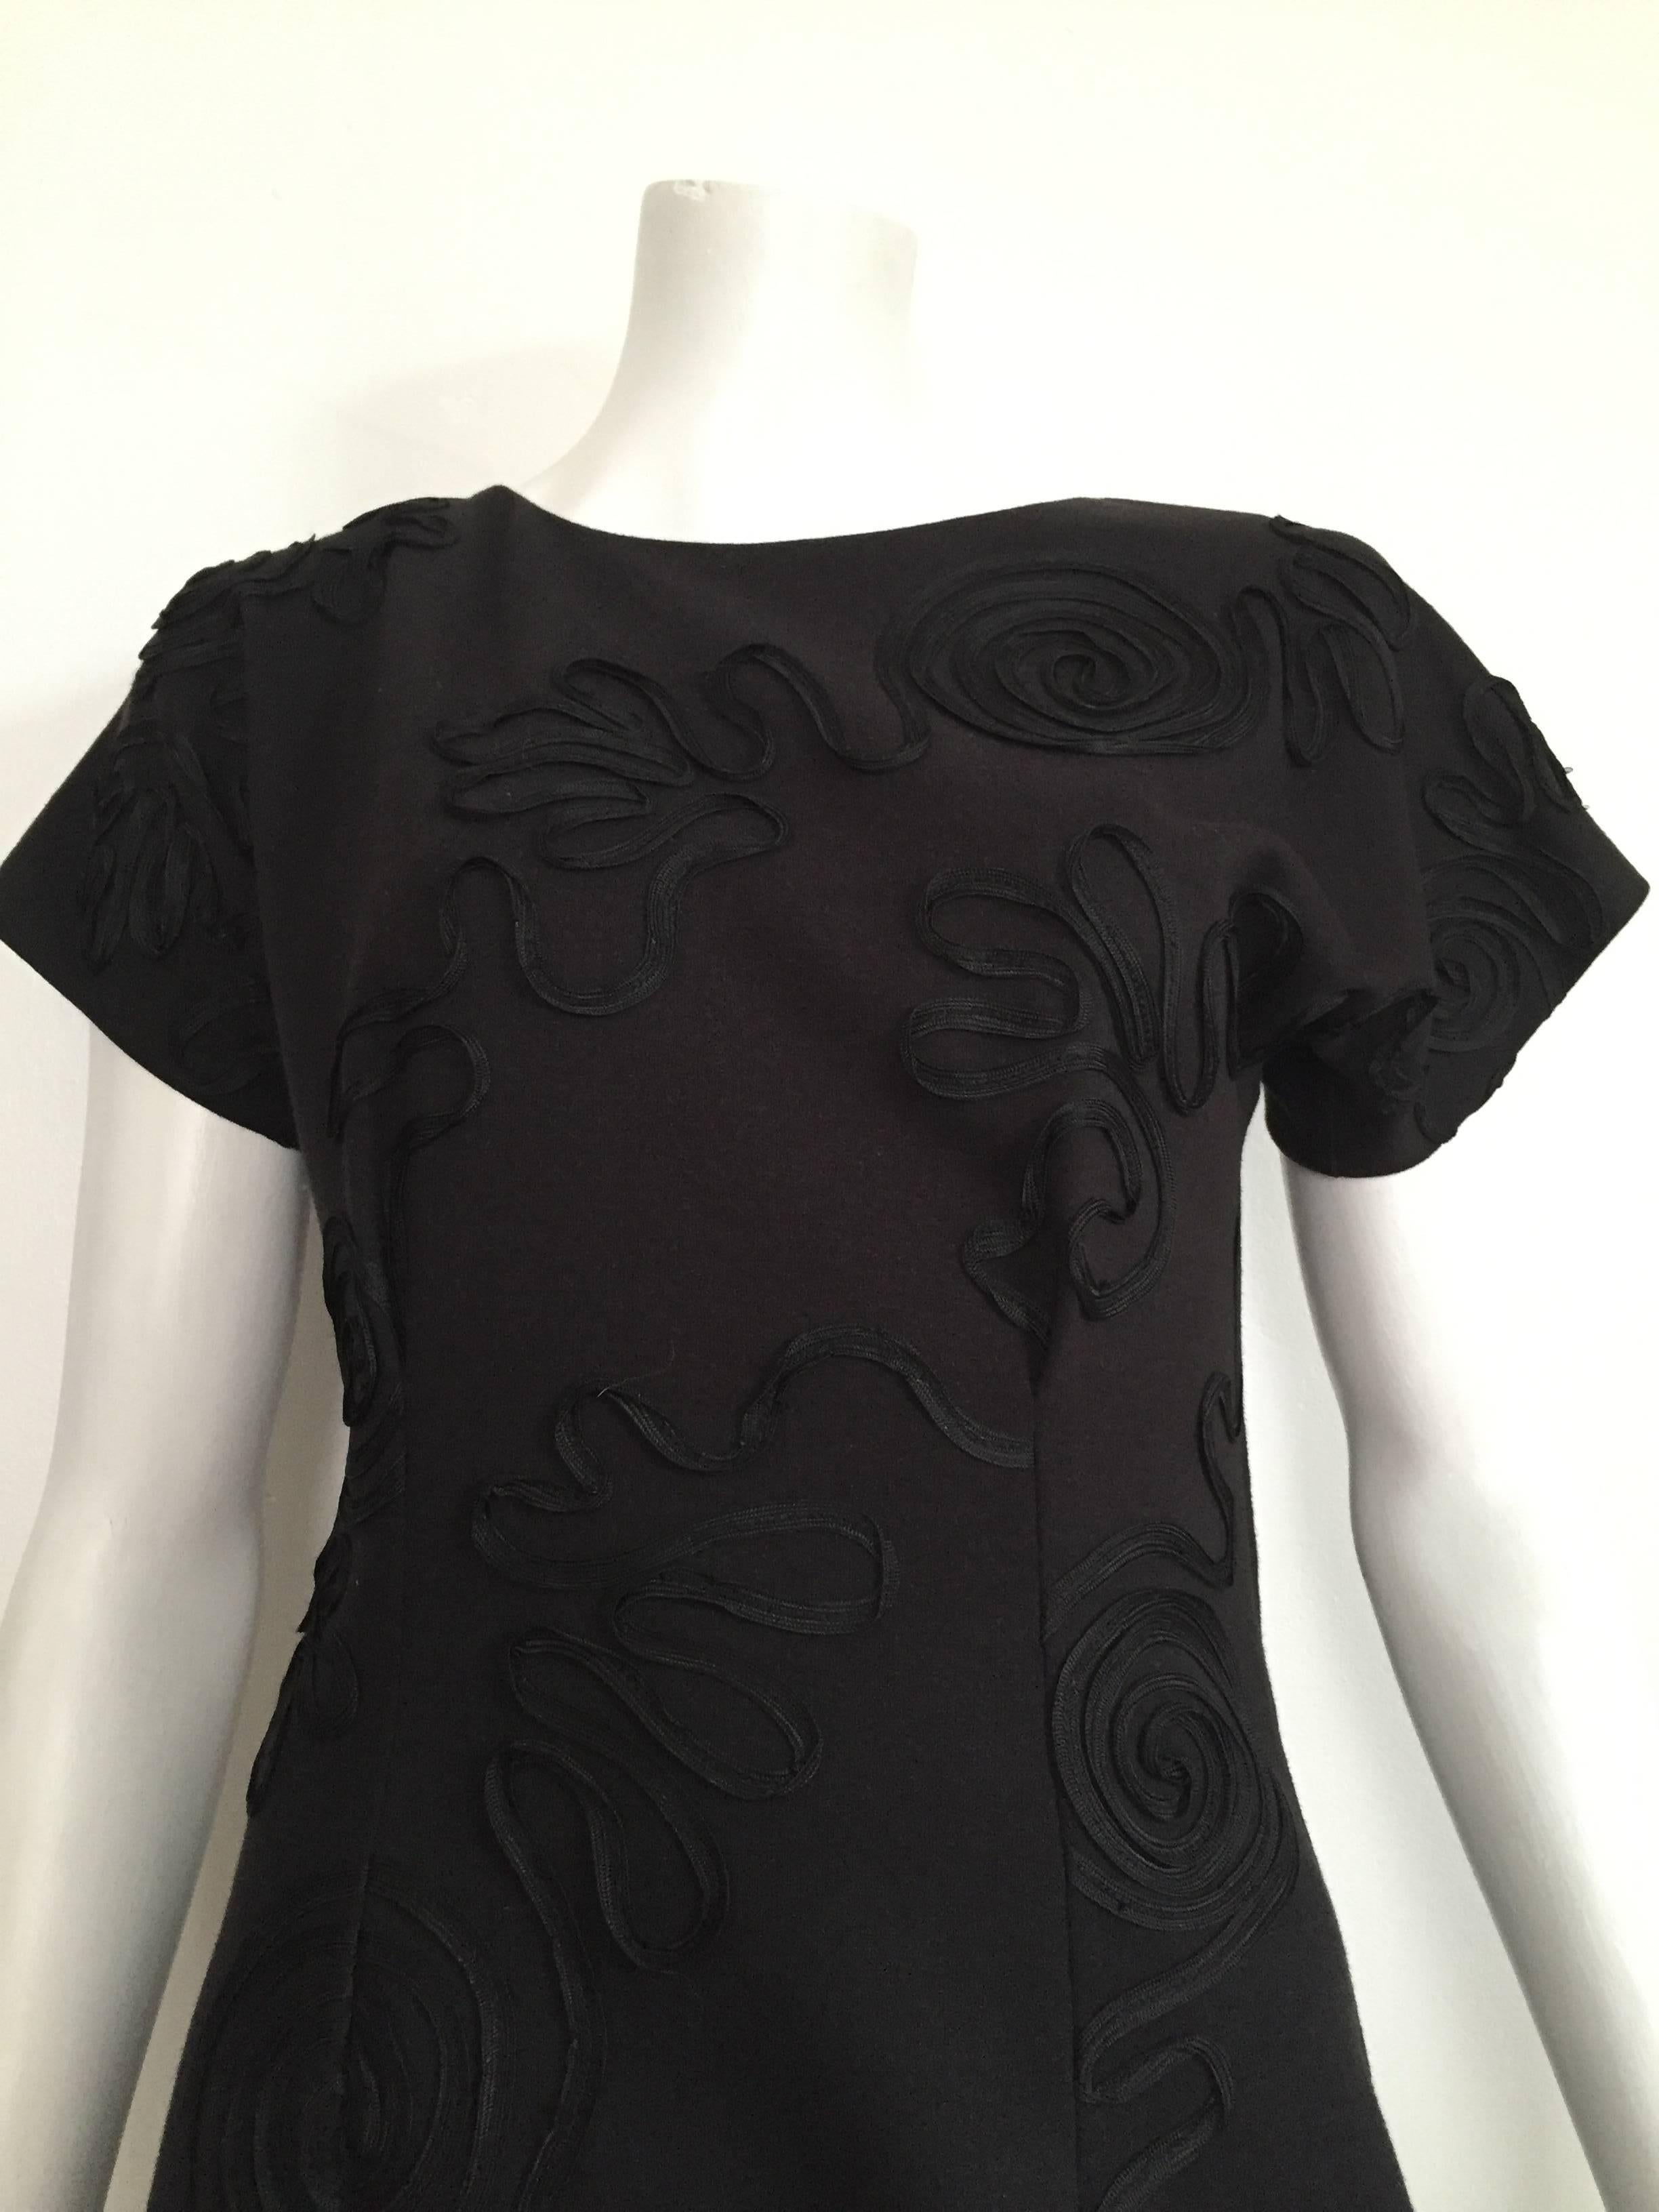 Leo Narducci Studio 1980s cotton little black dress is a size 4.  Front sewn ribbon swirl patterns makes this dress sexy & modern. 
Measurements are:
32" bust
29" waist
36" hips
19" flat across bottom hem of dress
29"